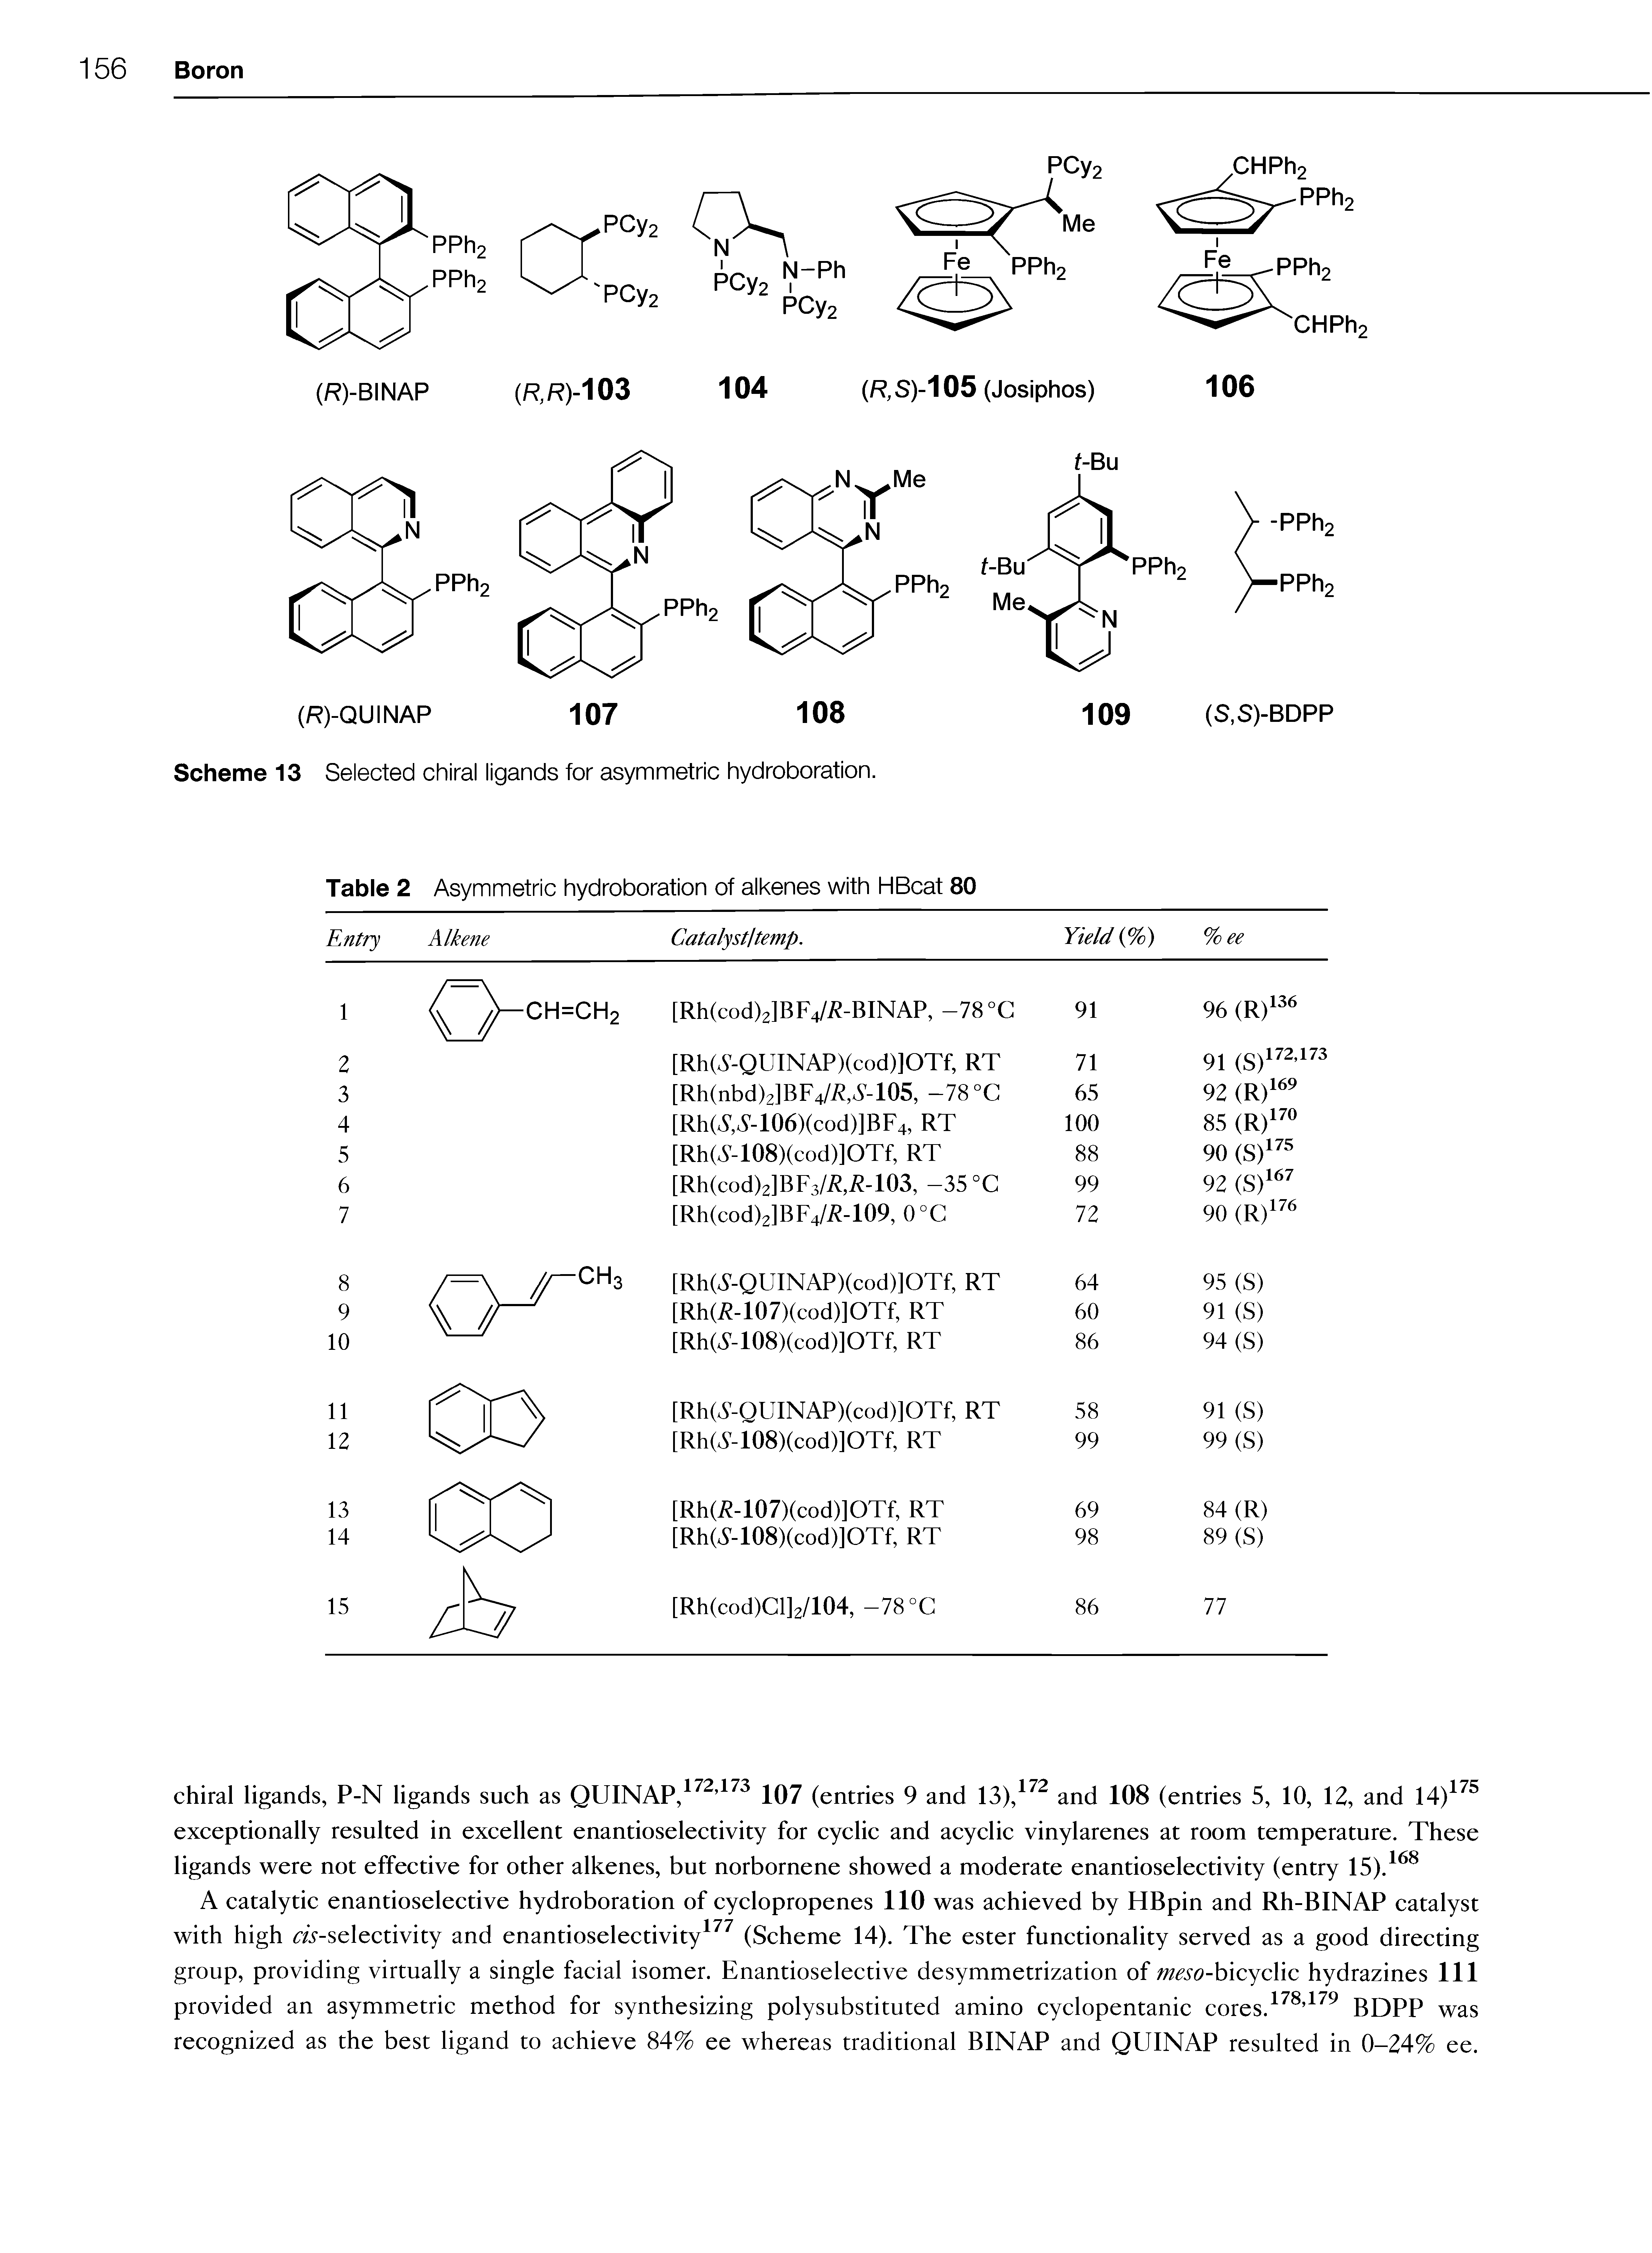 Table 2 Asymmetric hydroboration of alkenes with HBcat 80...